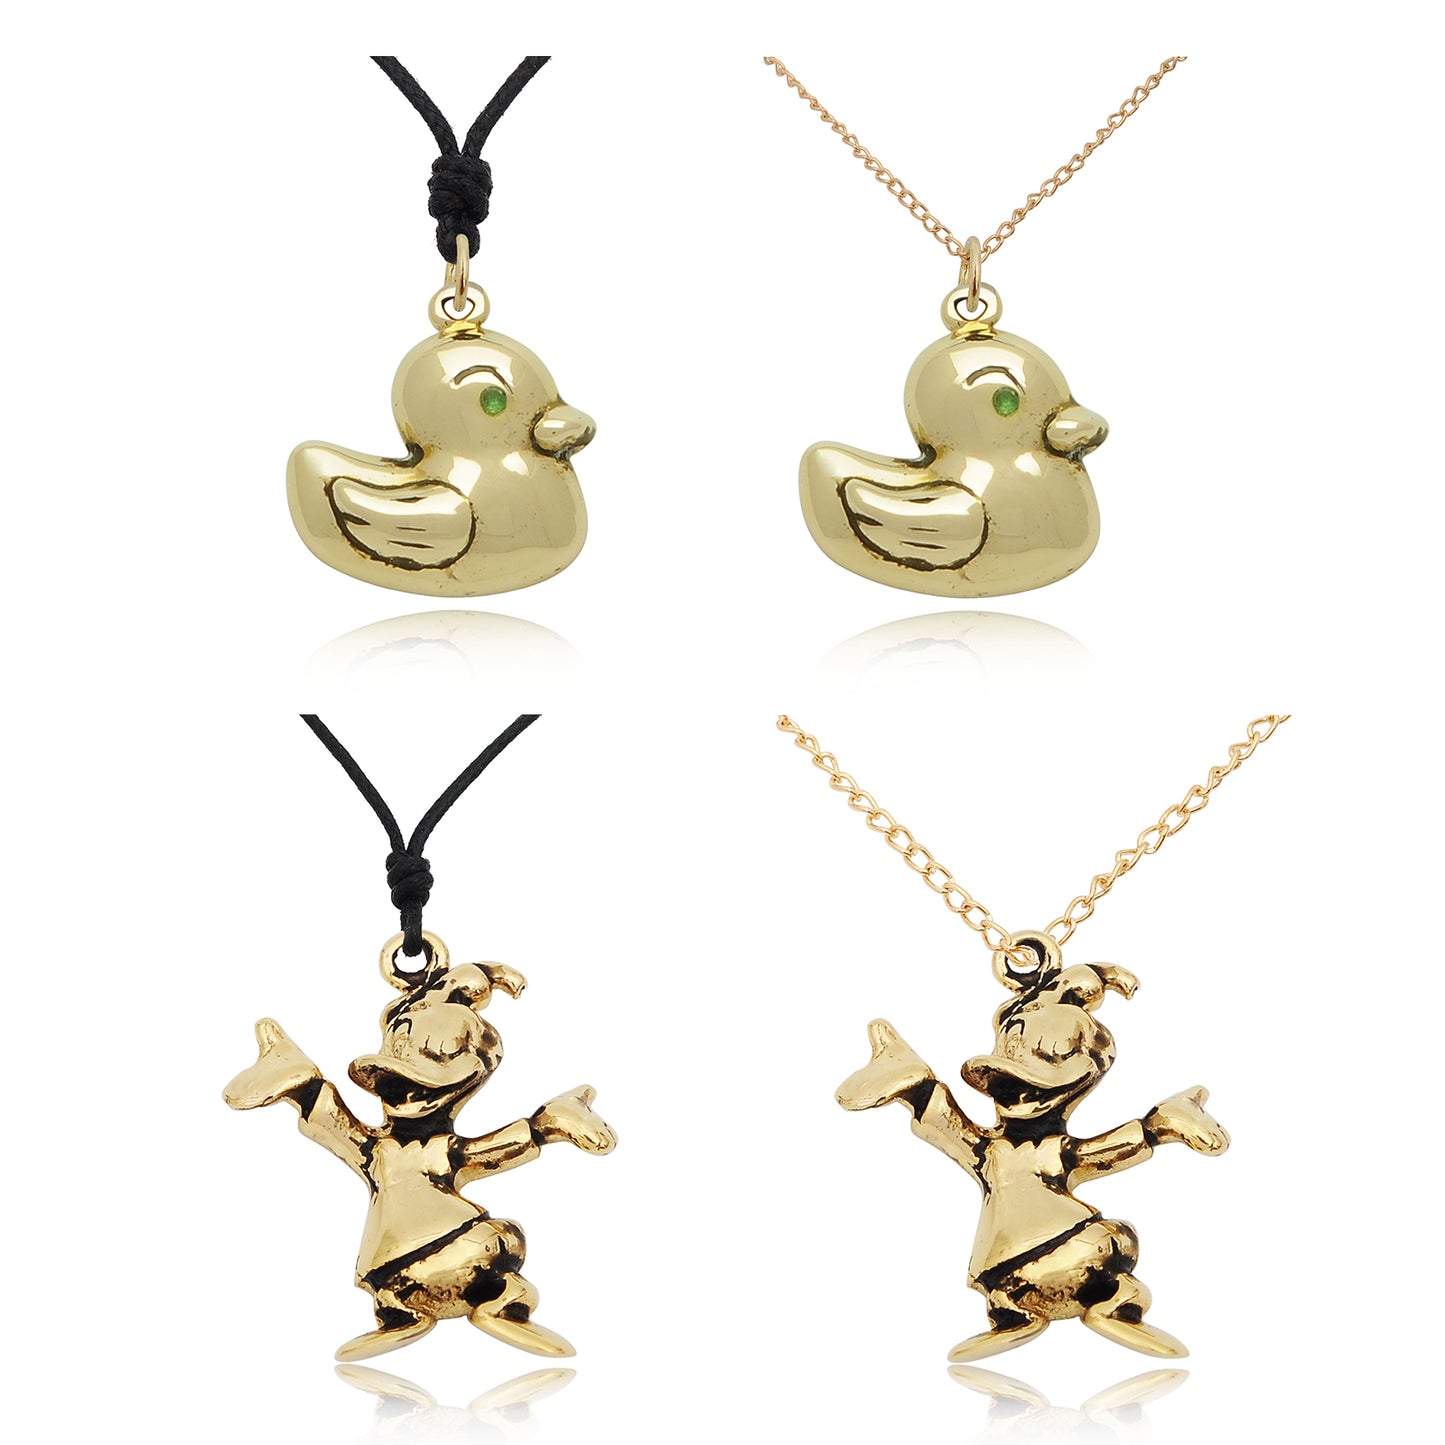 Happy Duck Handmade Brass Necklace Pendant Jewelry